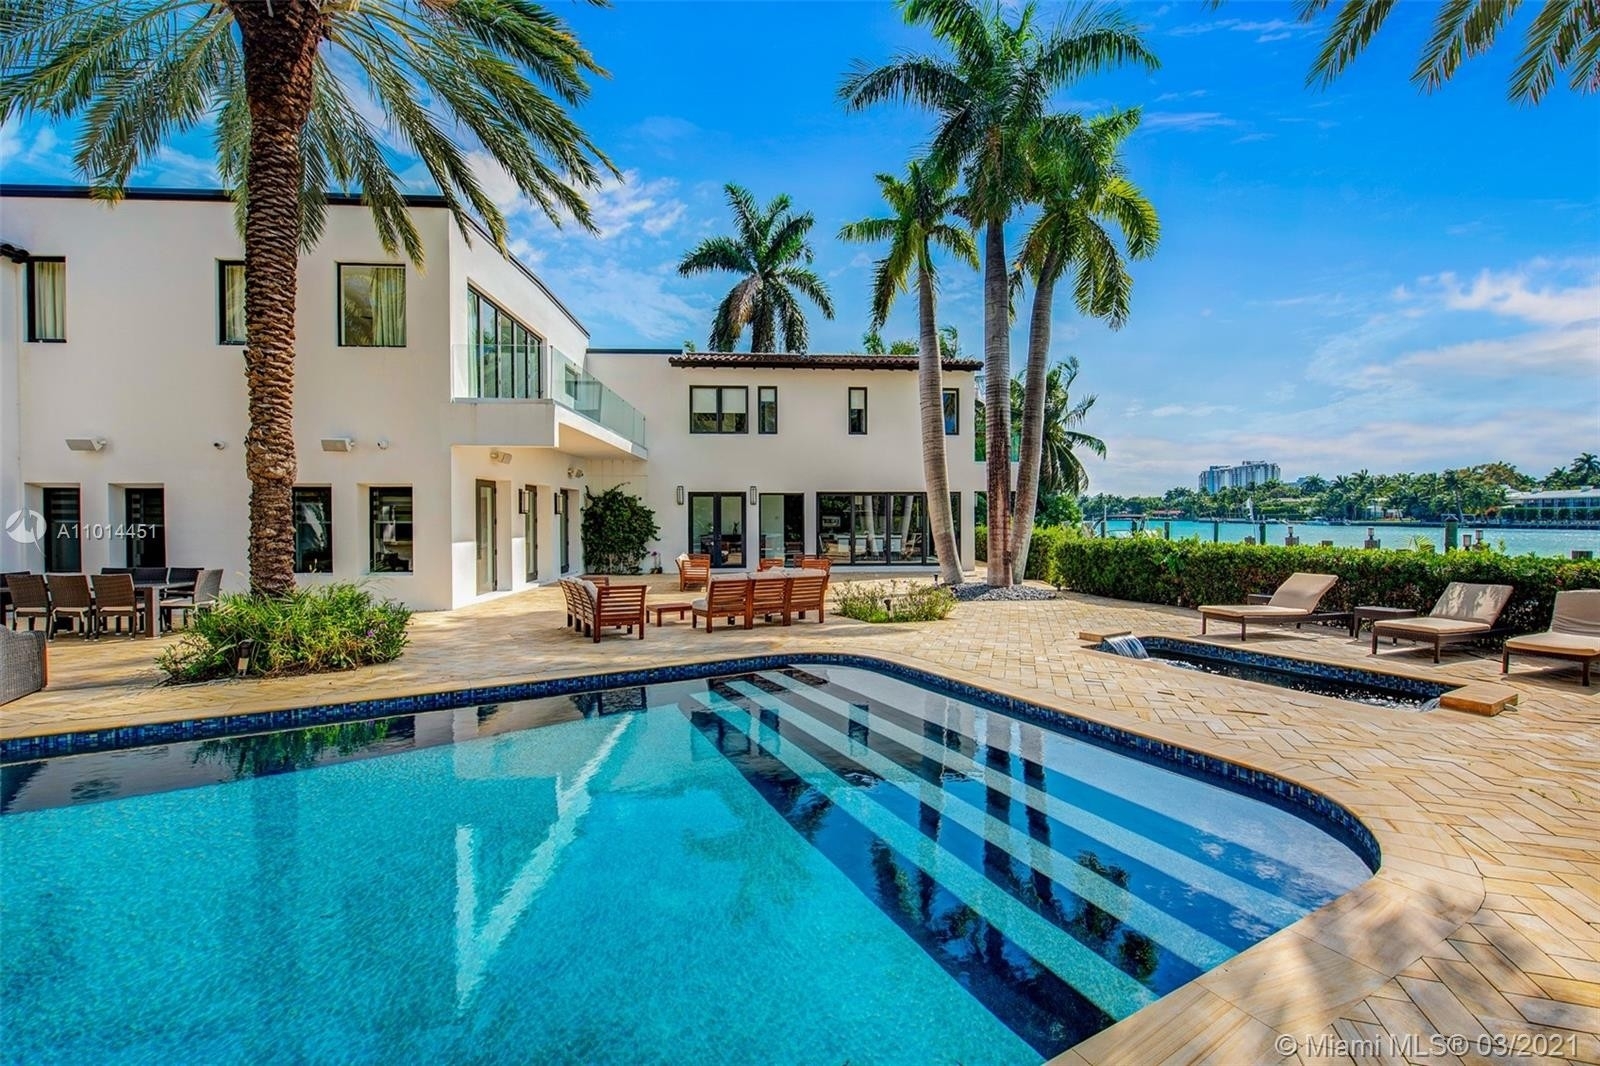 Single Family Home at Bayshore, Miami Beach, FL 33140